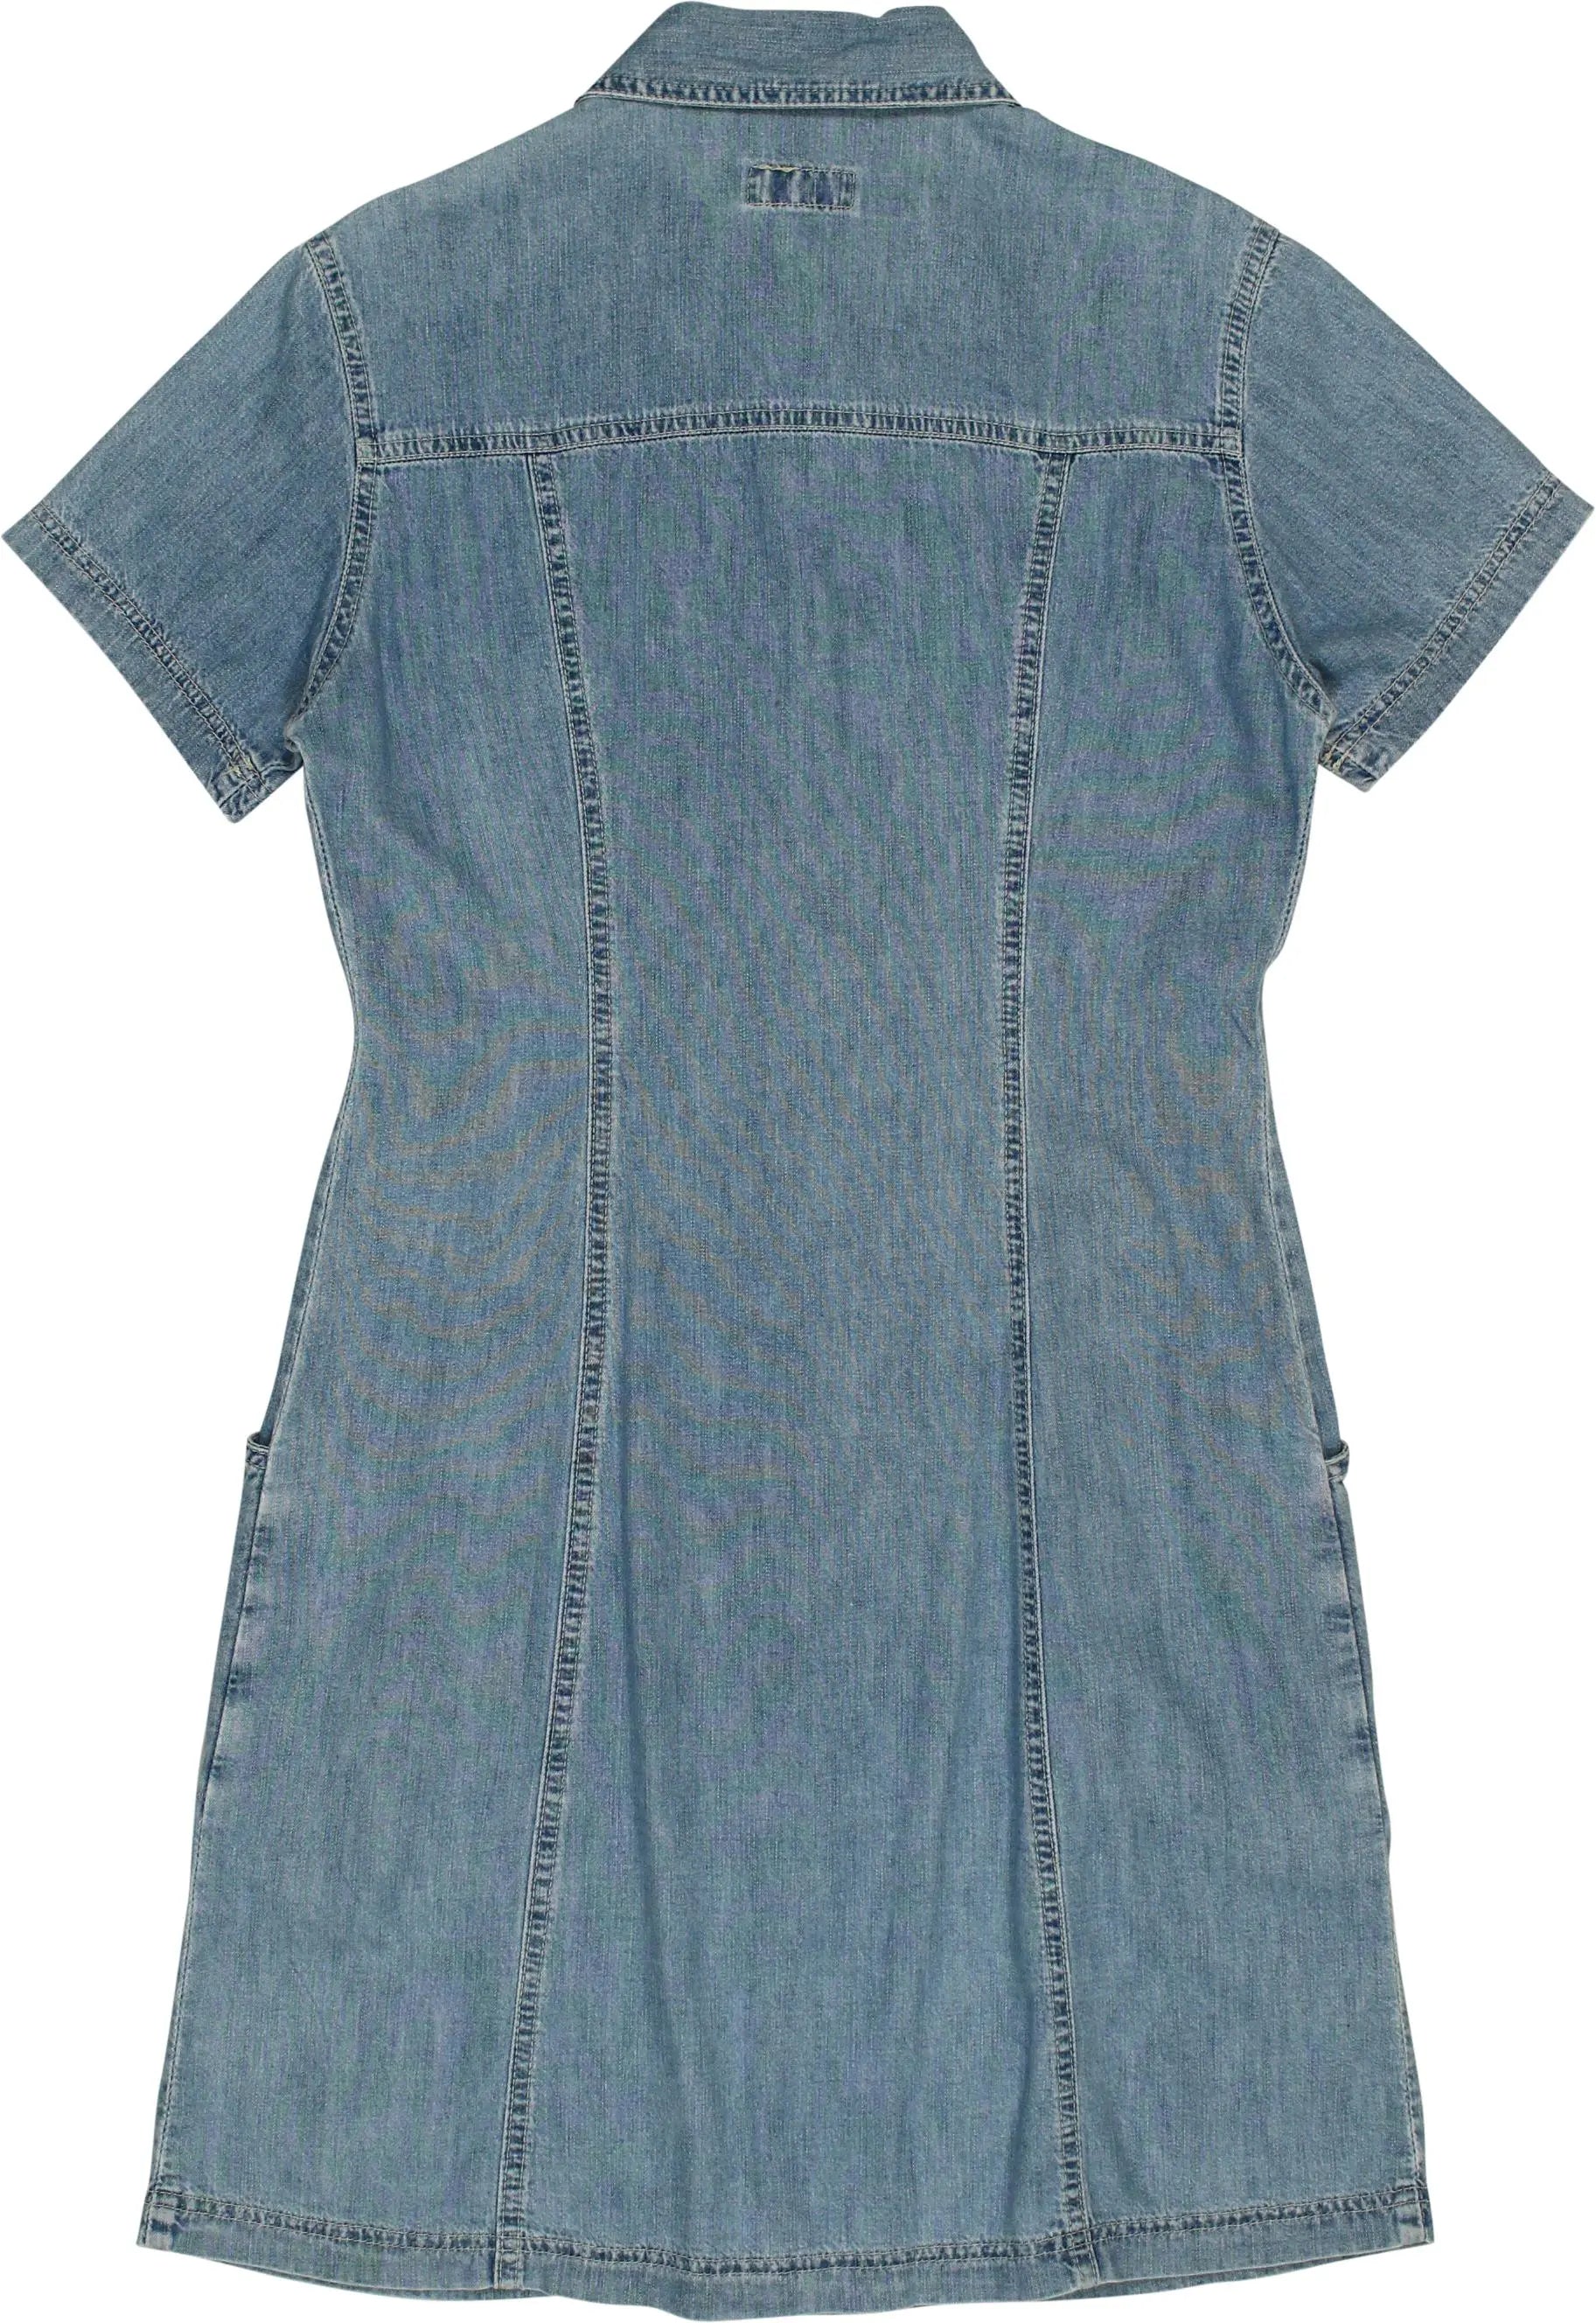 Girls Wear - 90s Denim Dress- ThriftTale.com - Vintage and second handclothing